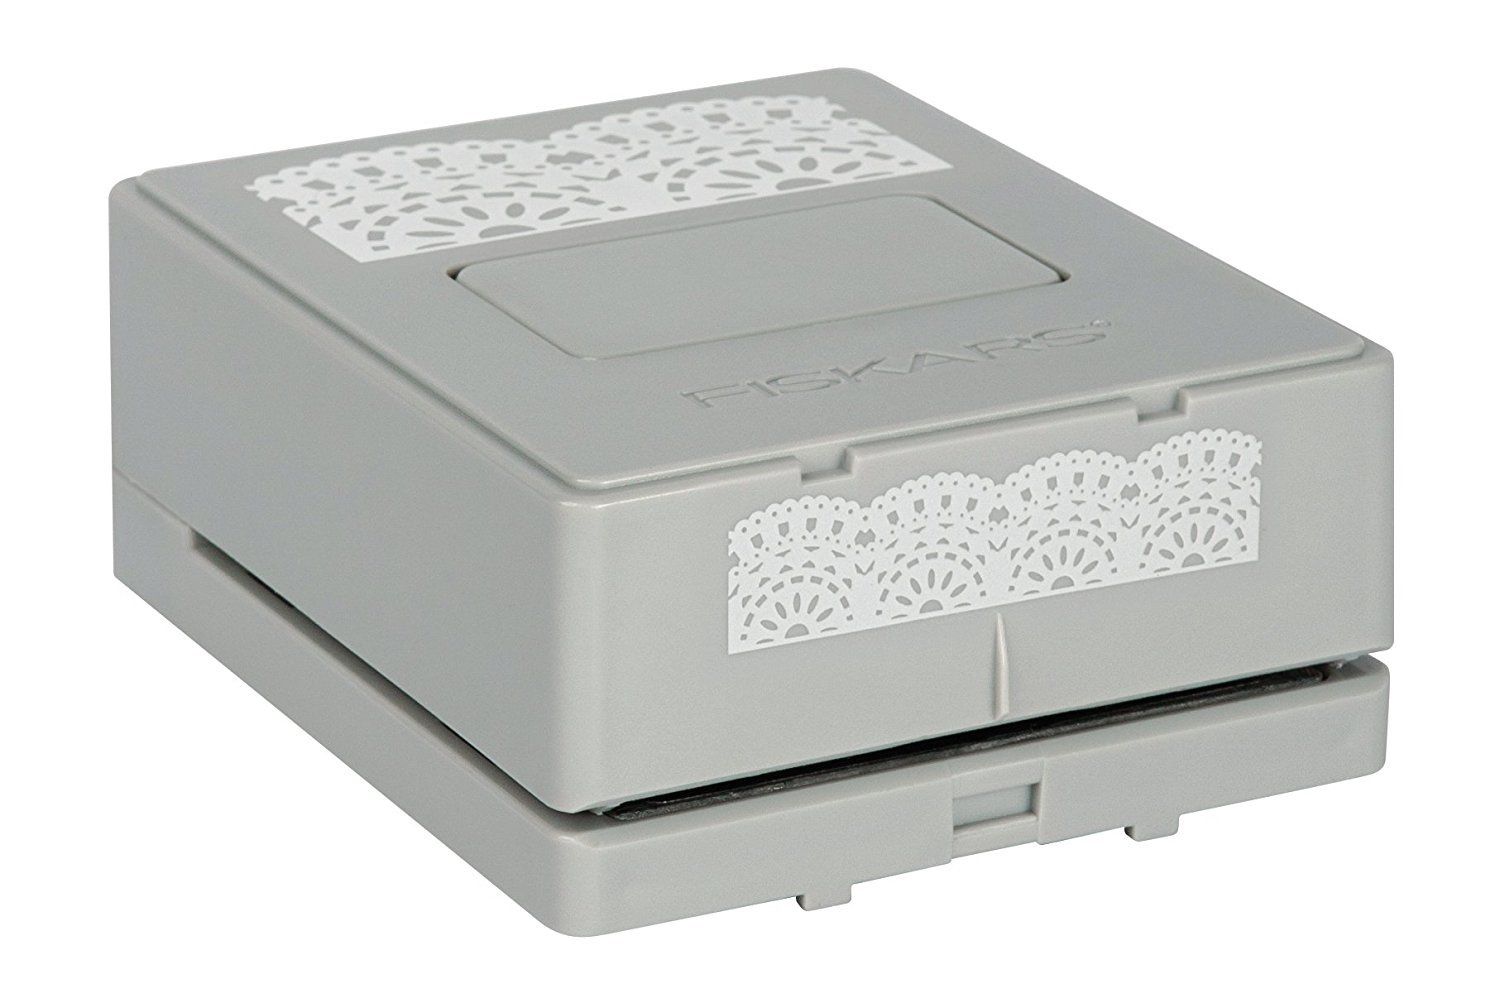 Fiskars 105700-1002 Antique Lace Large Punch Cartridge For AdvantEdge System